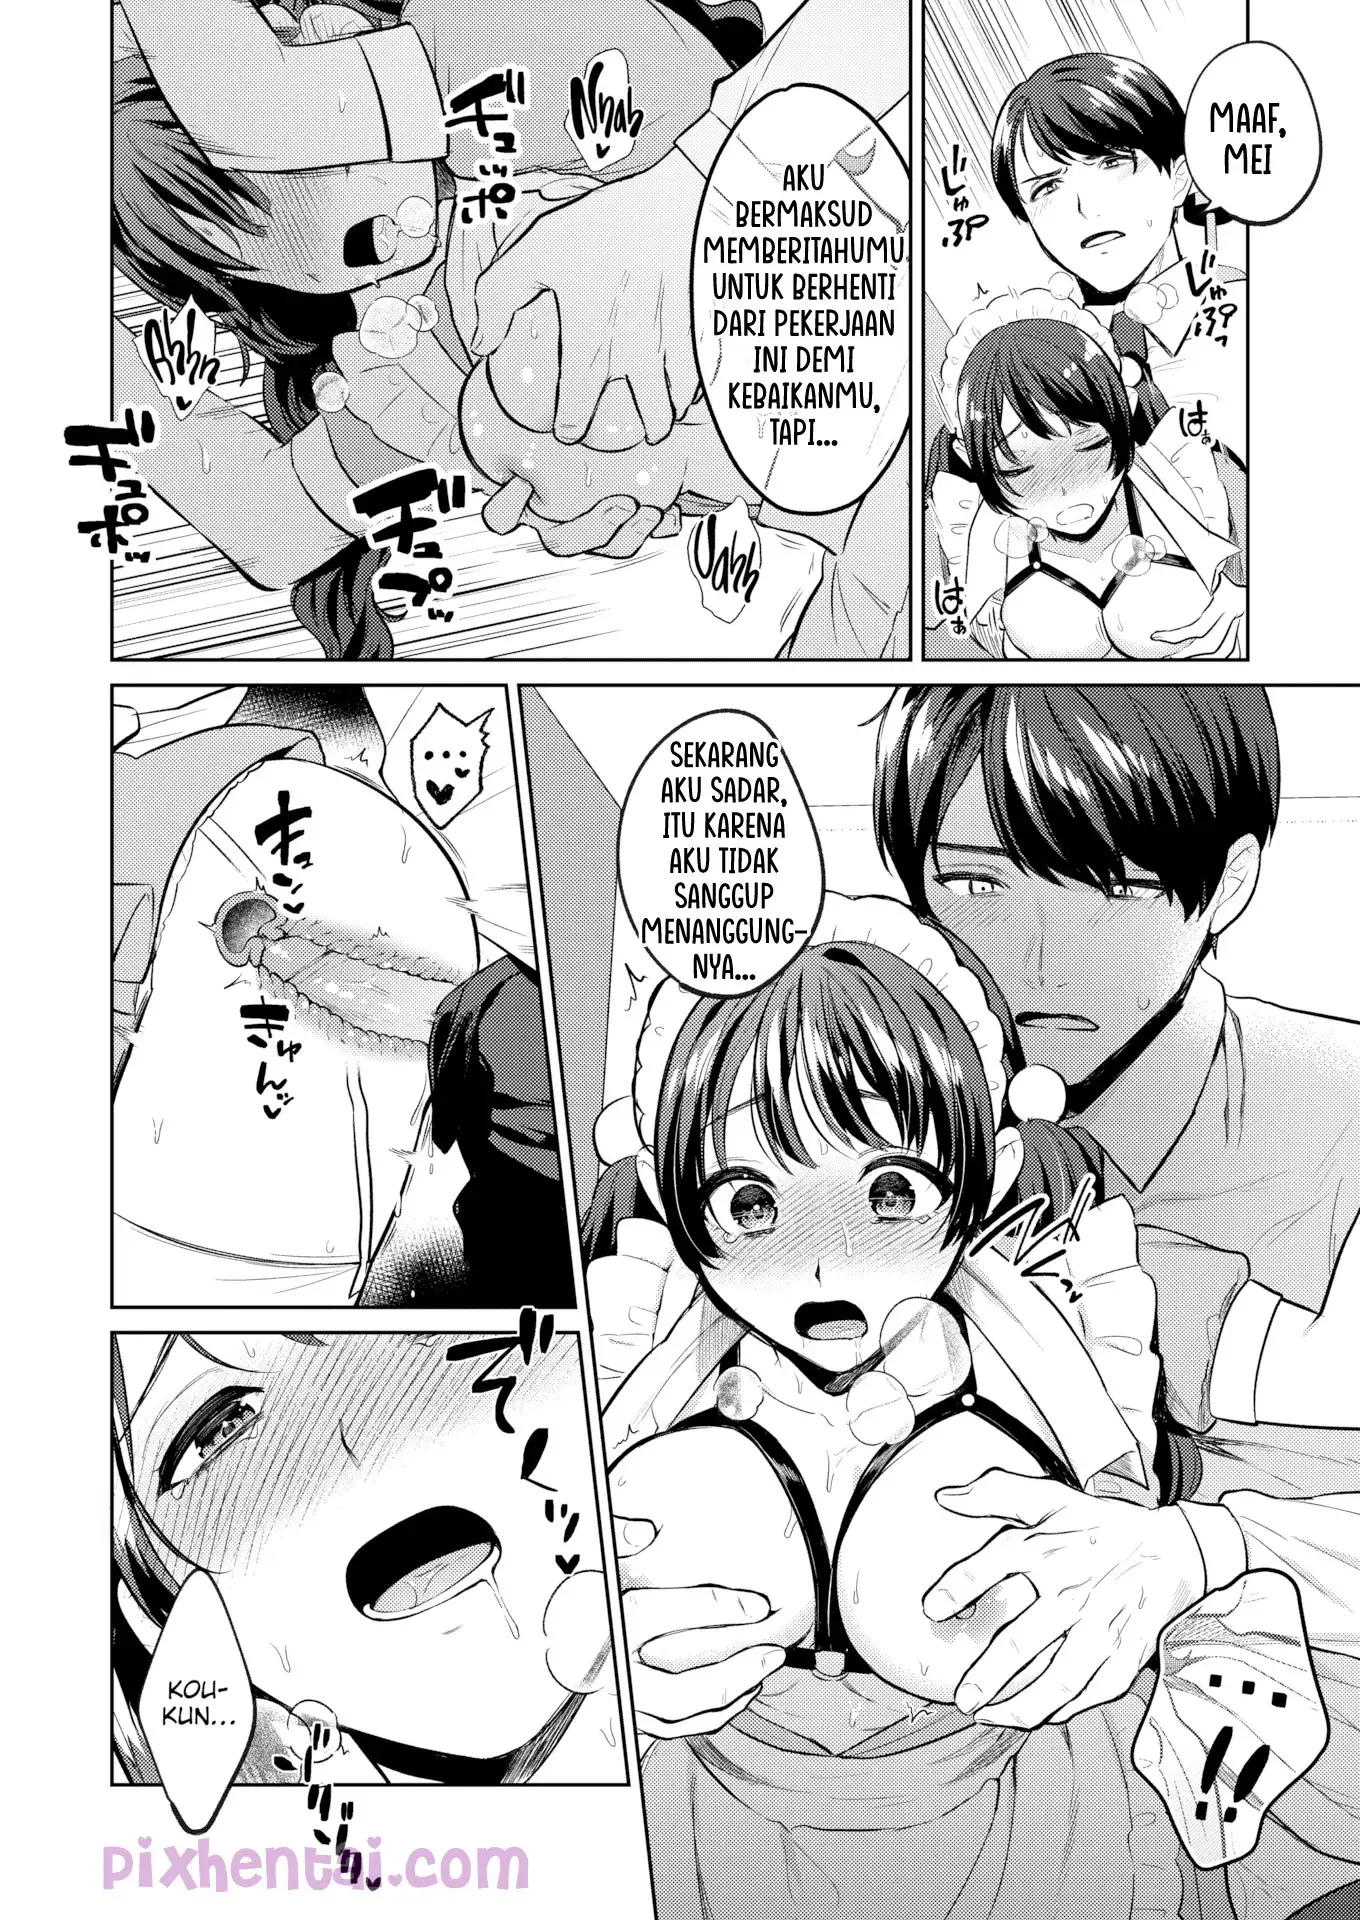 Komik hentai xxx manga sex bokep Careful of Maid Cafes Where Touching is OK 22